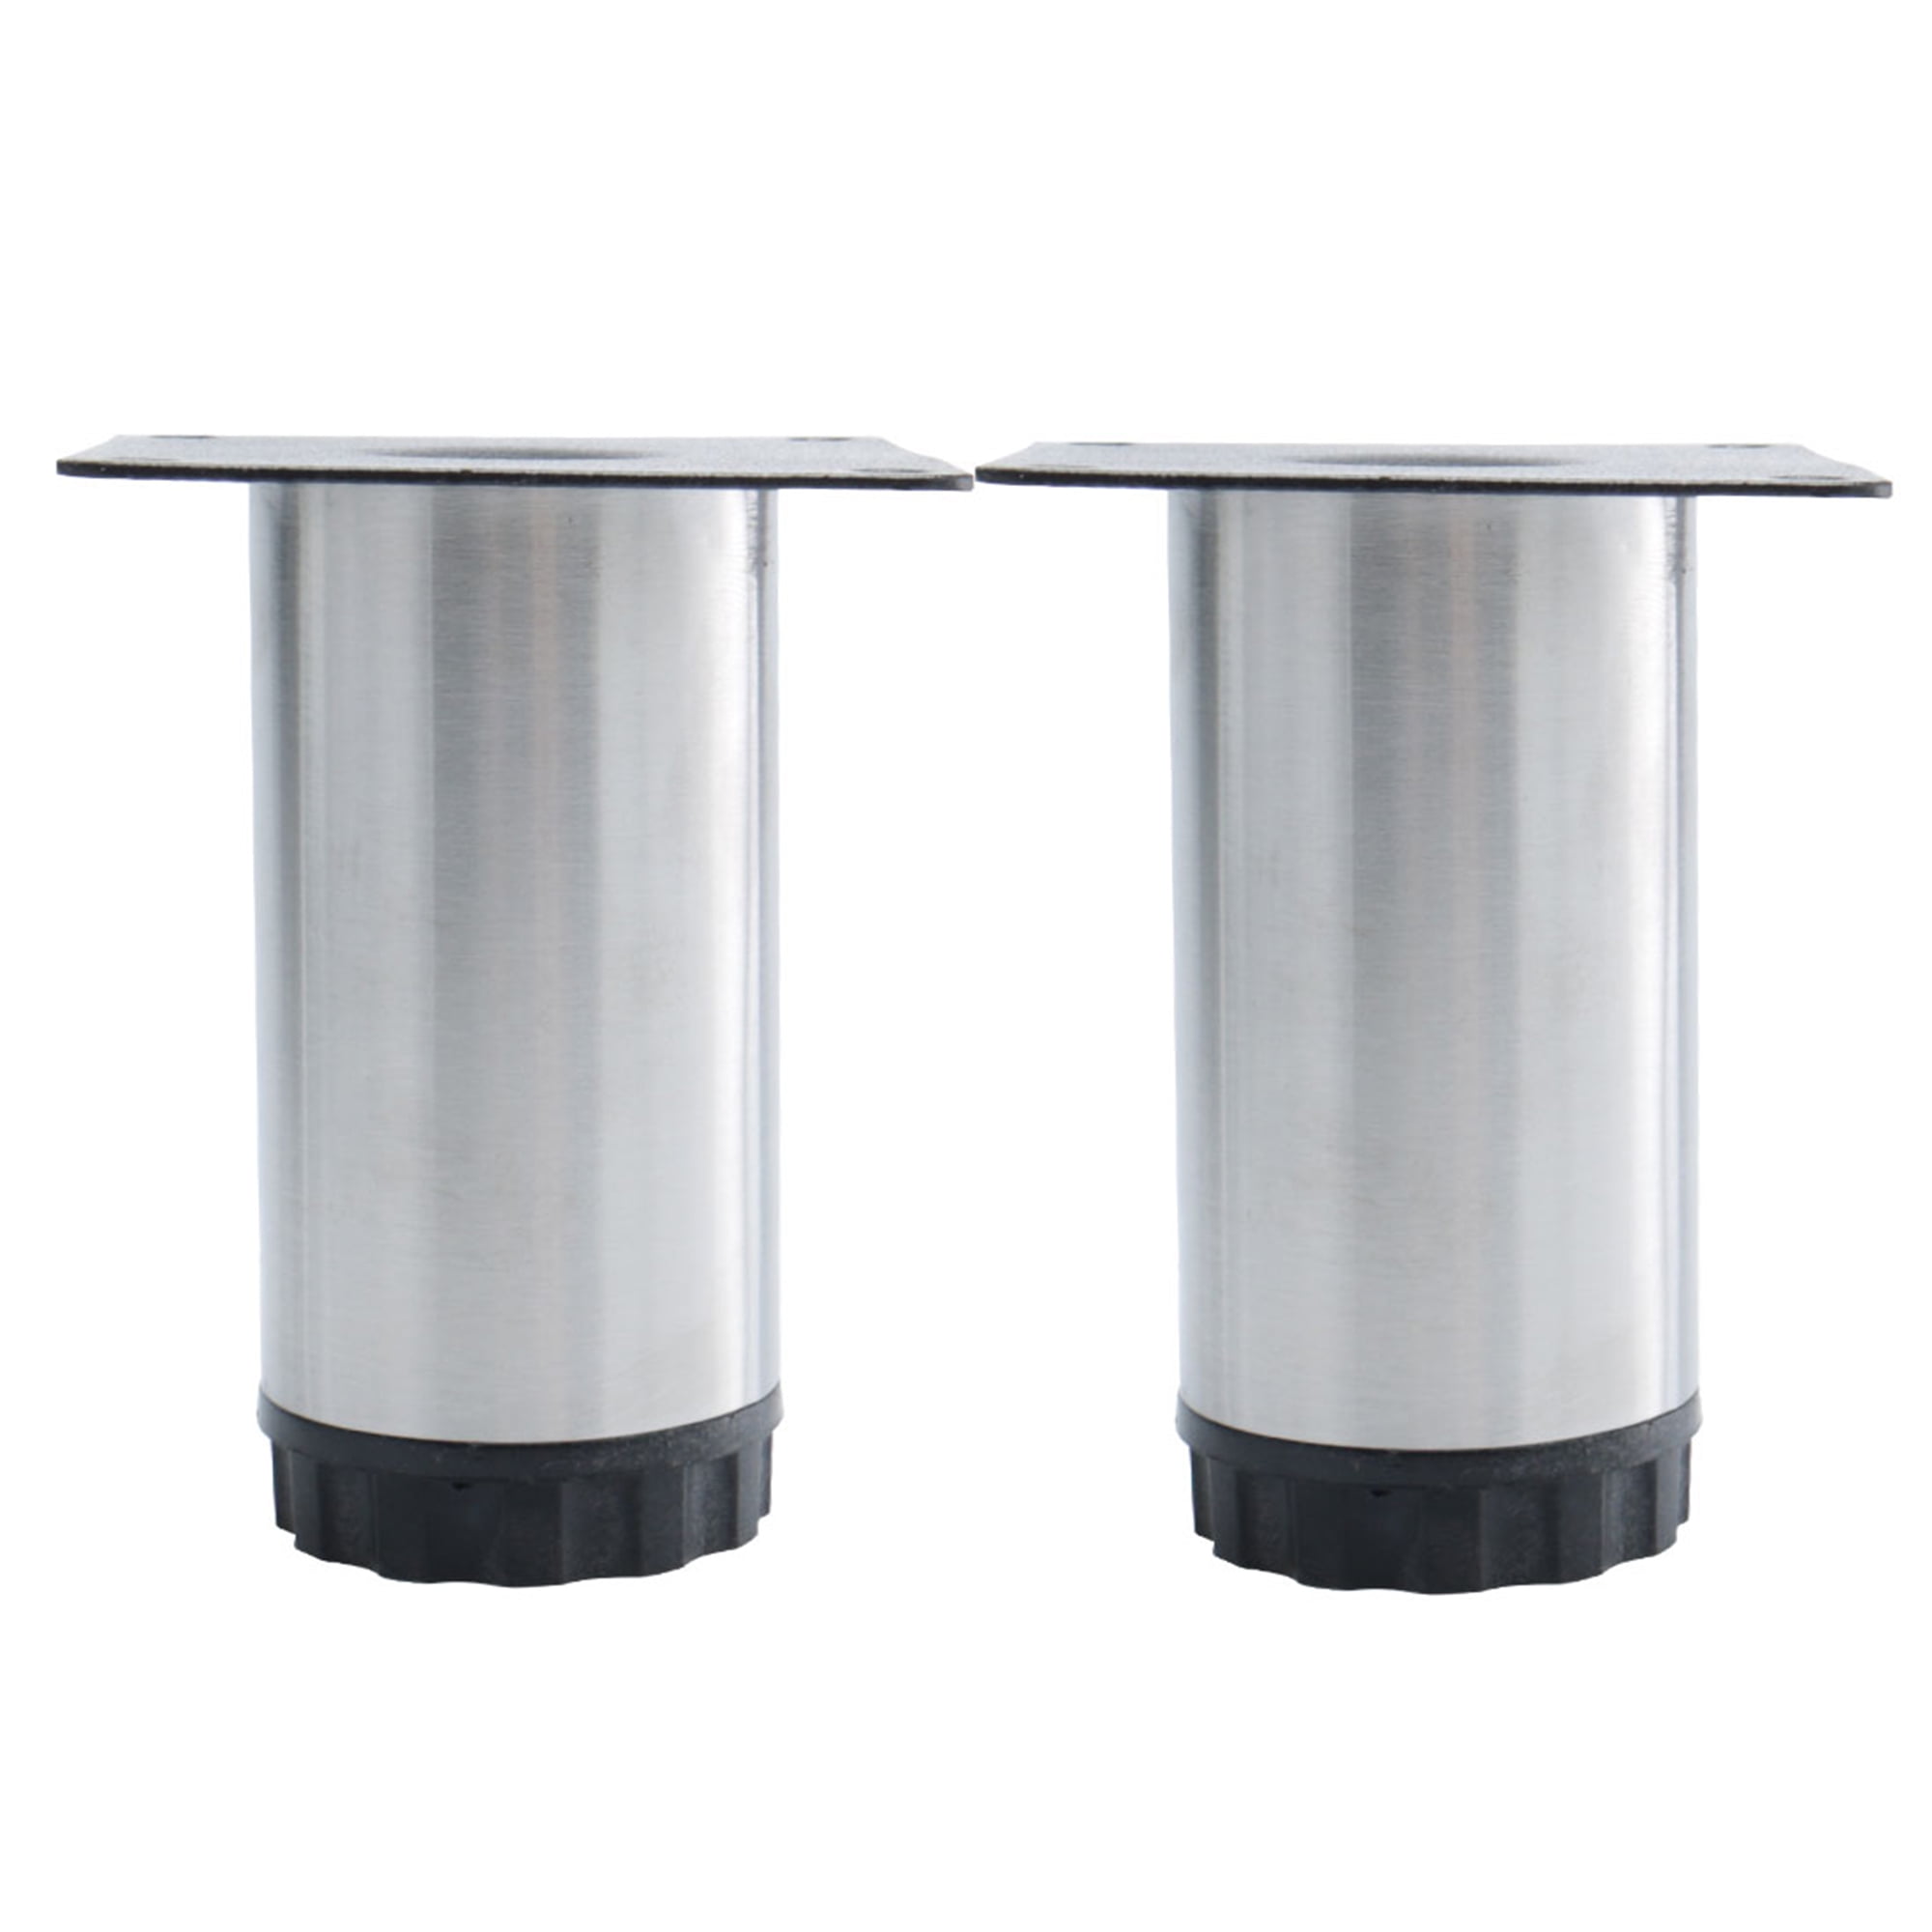 Stainless Steel Furniture Legs Adjustable Table Foot Antiskid Cabinet Foot Pads 